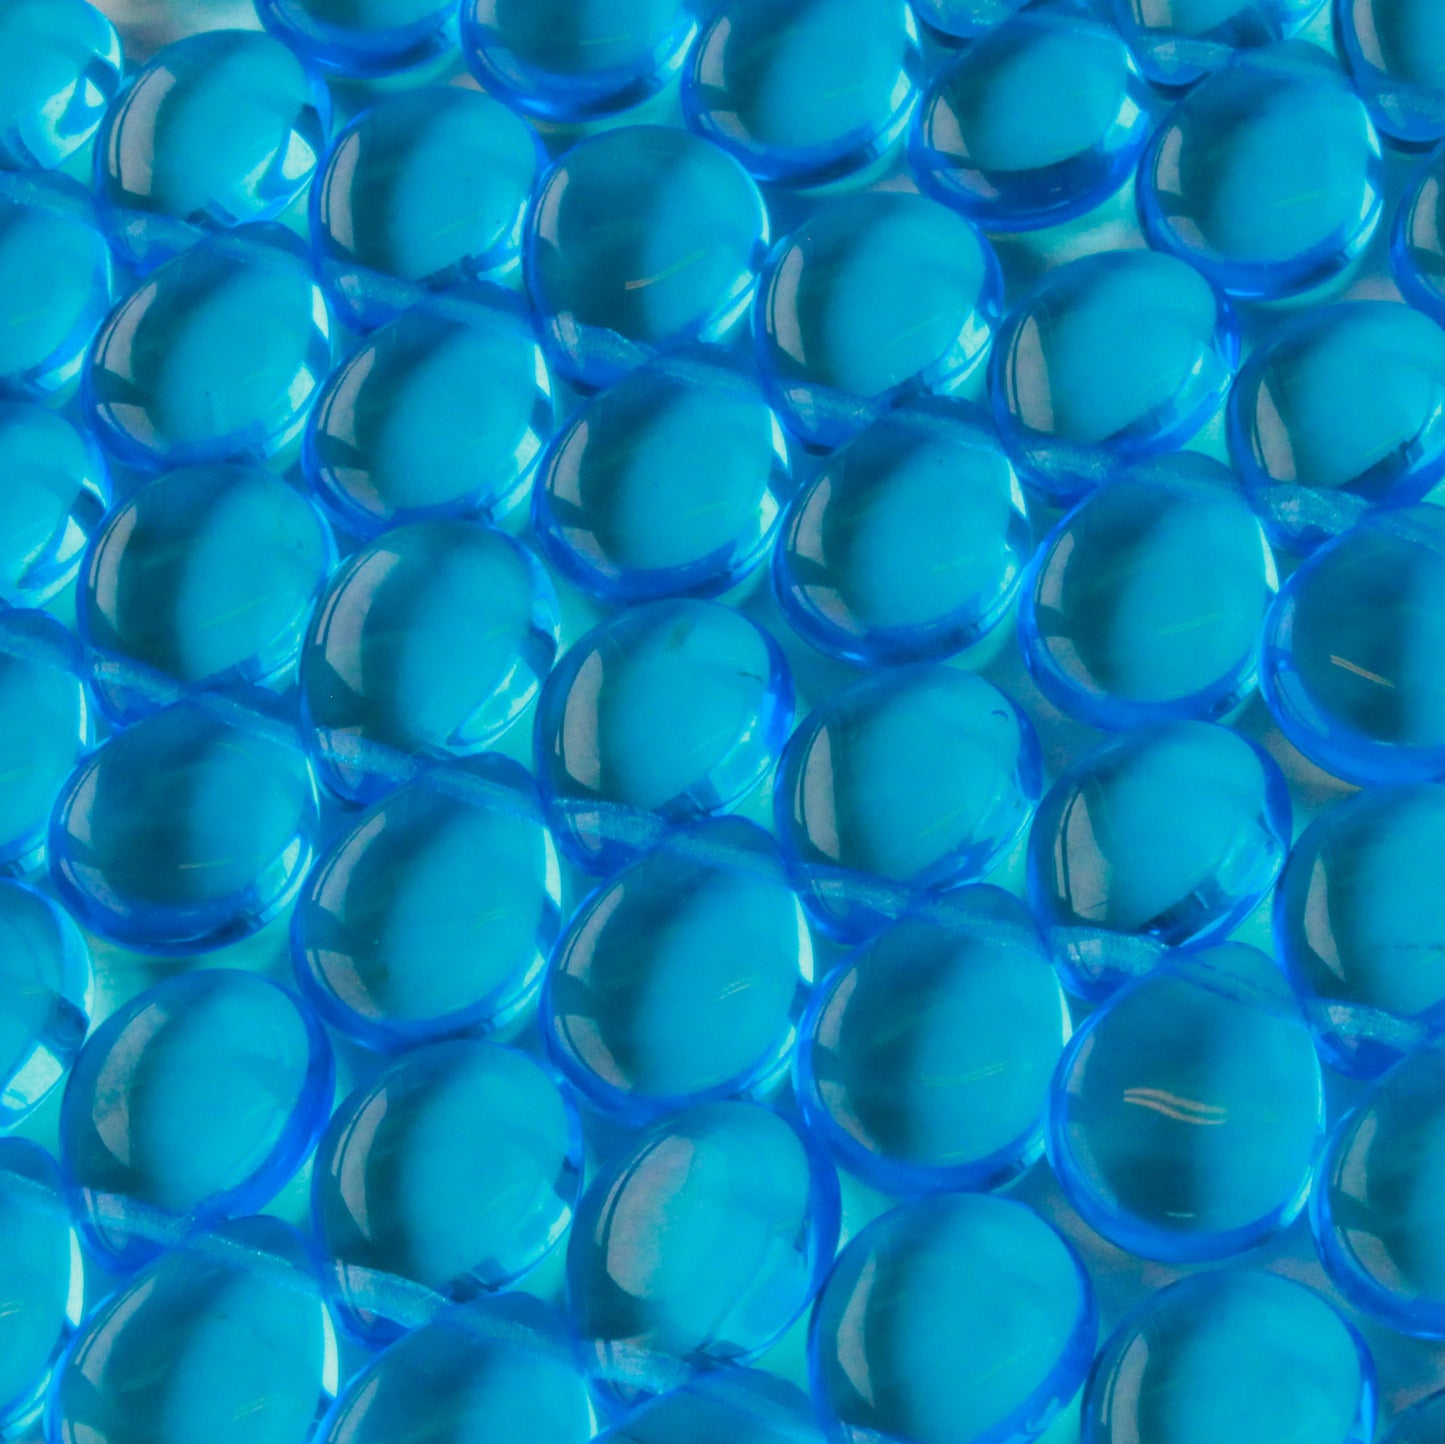 Load image into Gallery viewer, 12x16mm Flat Glass Teardrop Beads - Dk Aqua - 20 Beads
